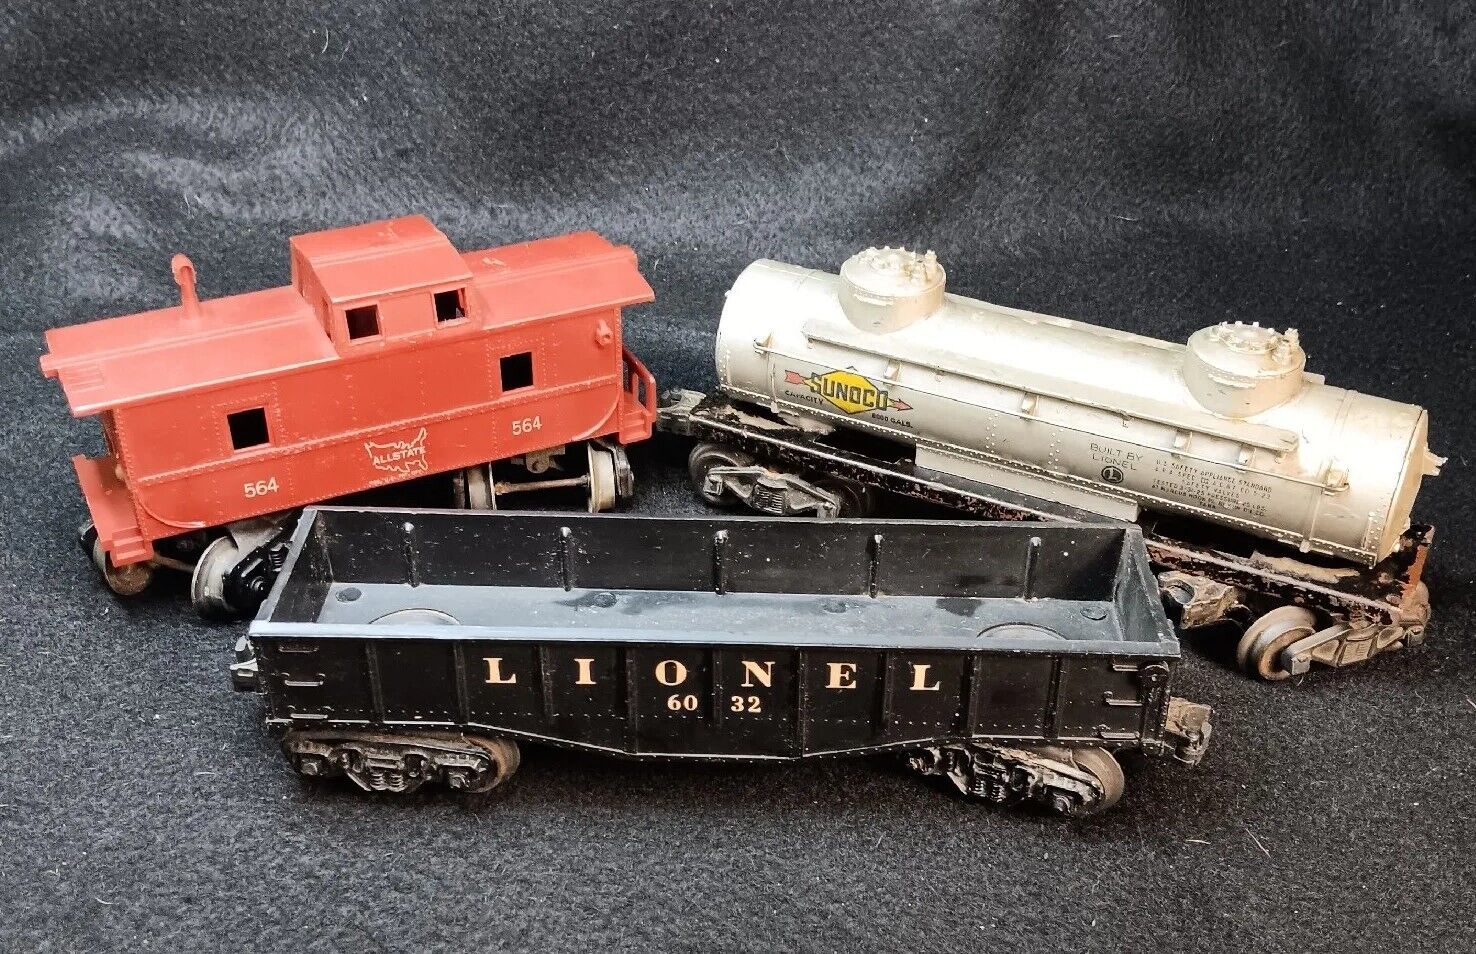 Lot of 3 Lionel Original Freight Cars 564 6465 6032  